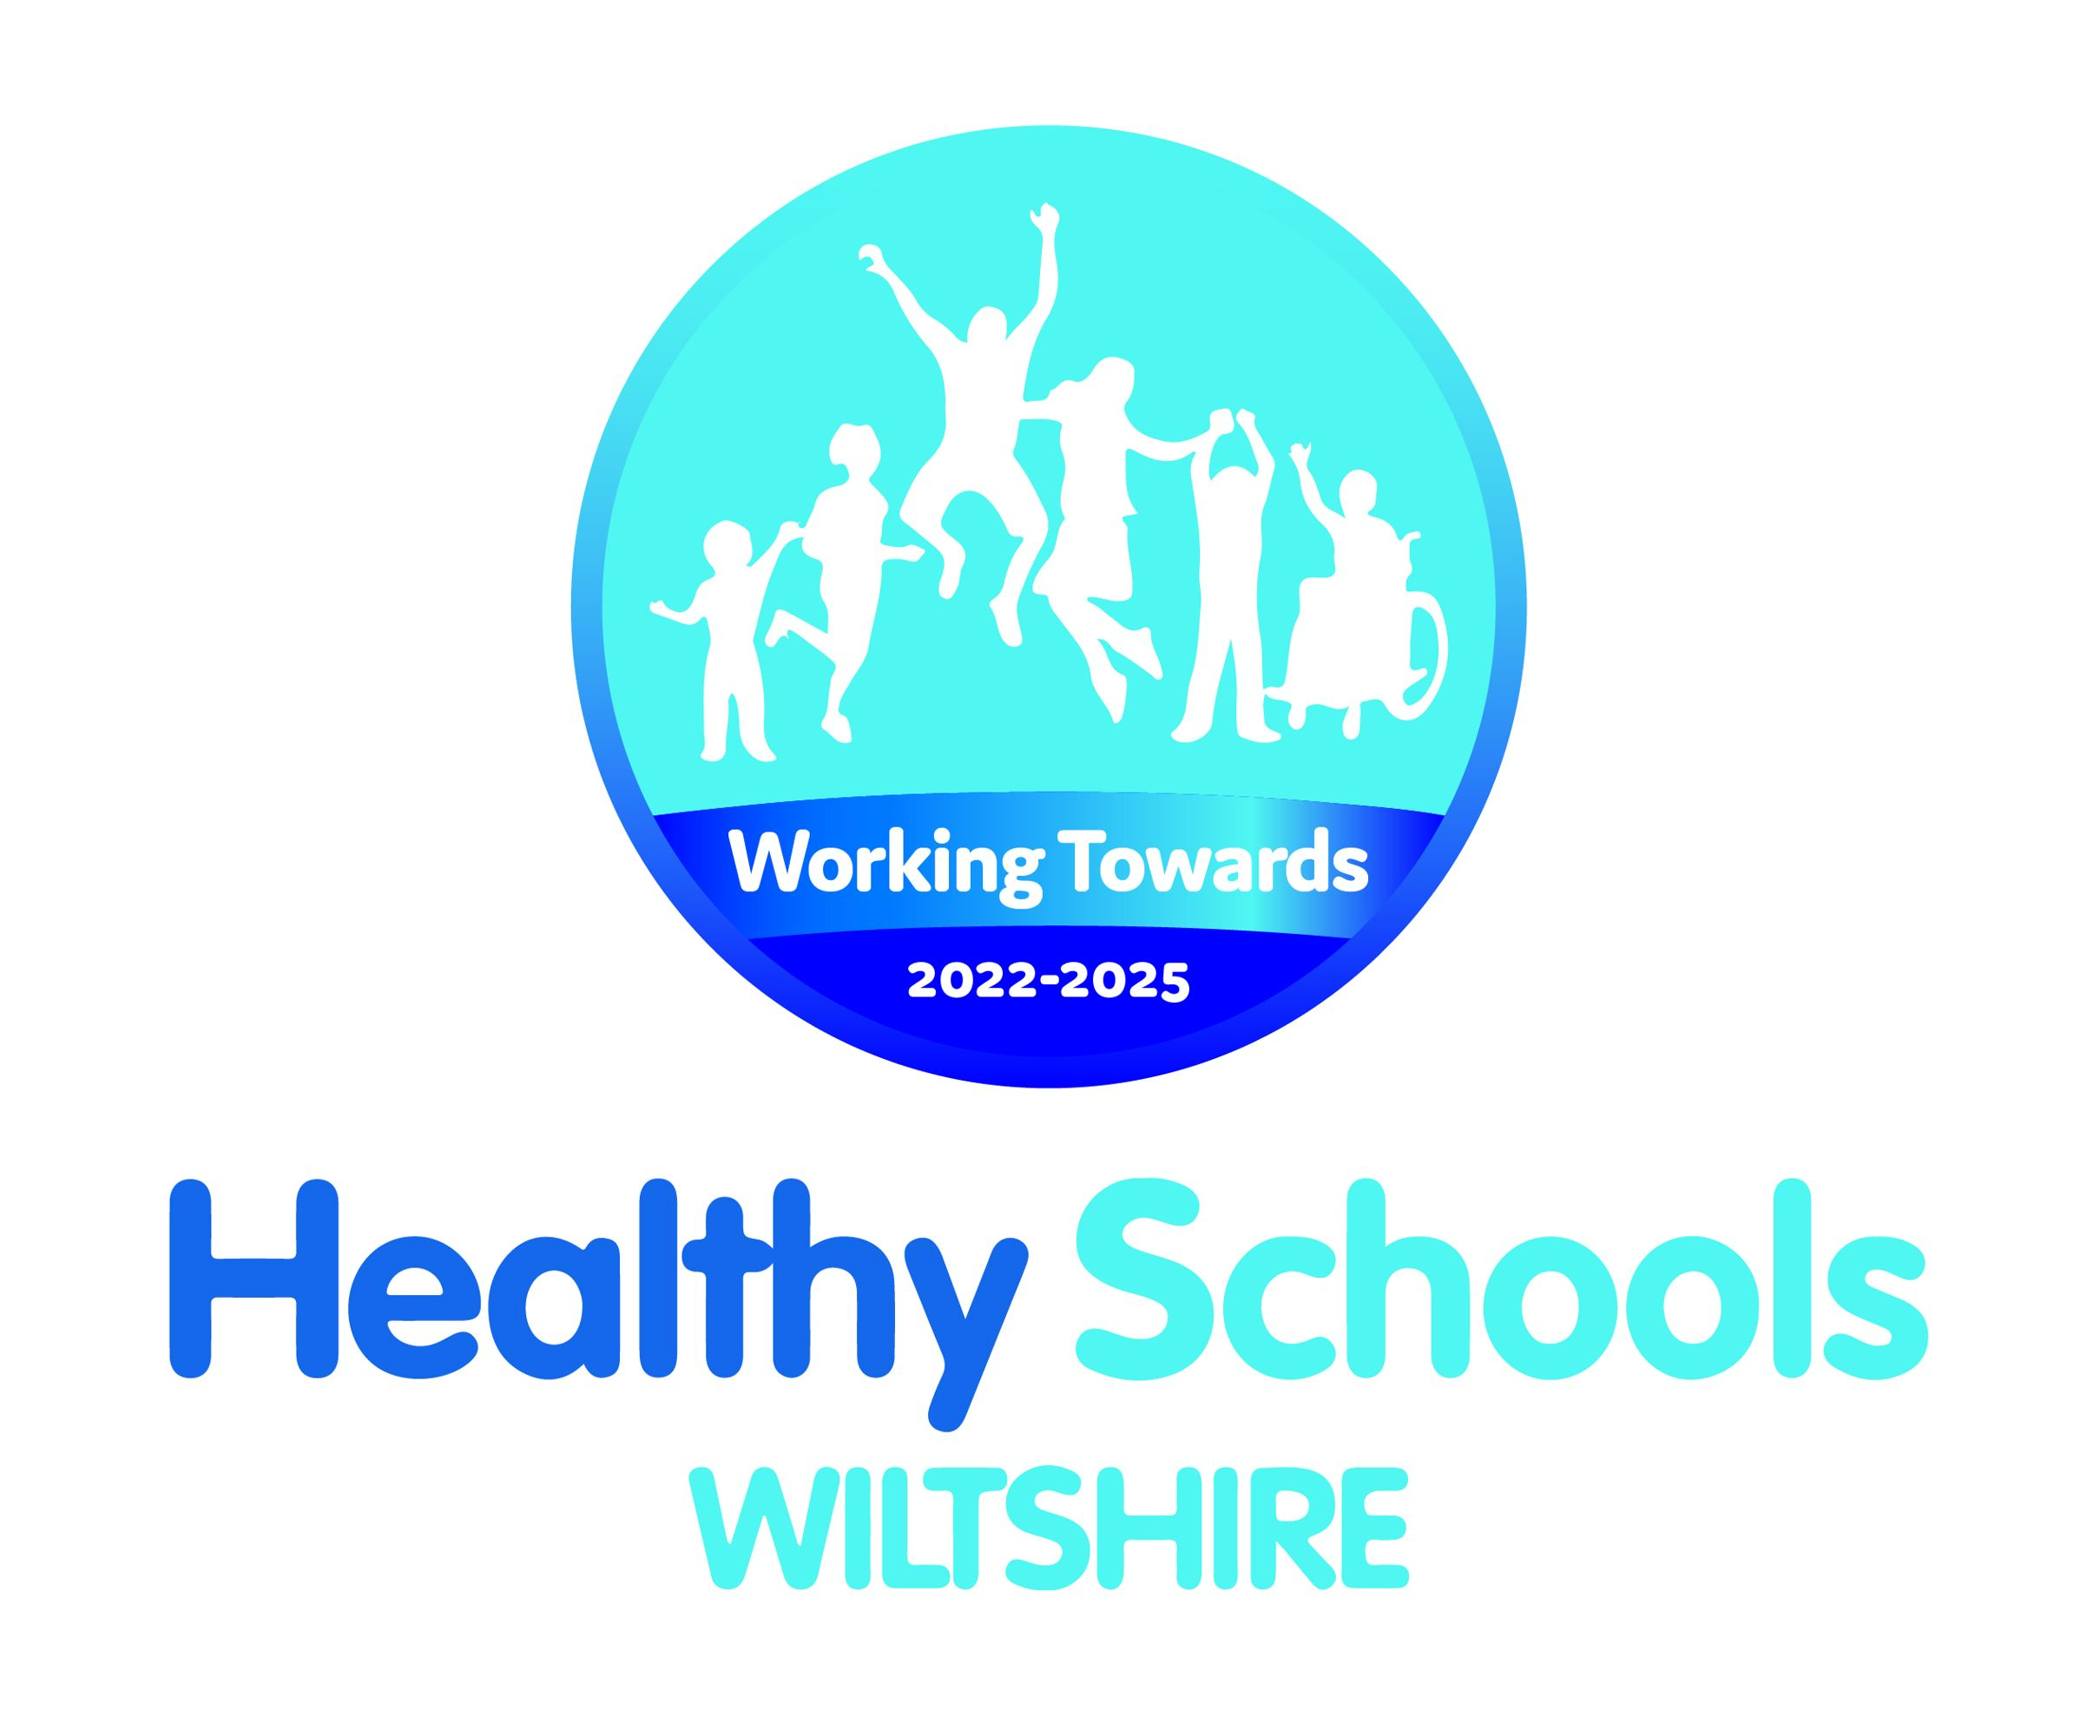 Healthy schools logos 2022 2025 working towards